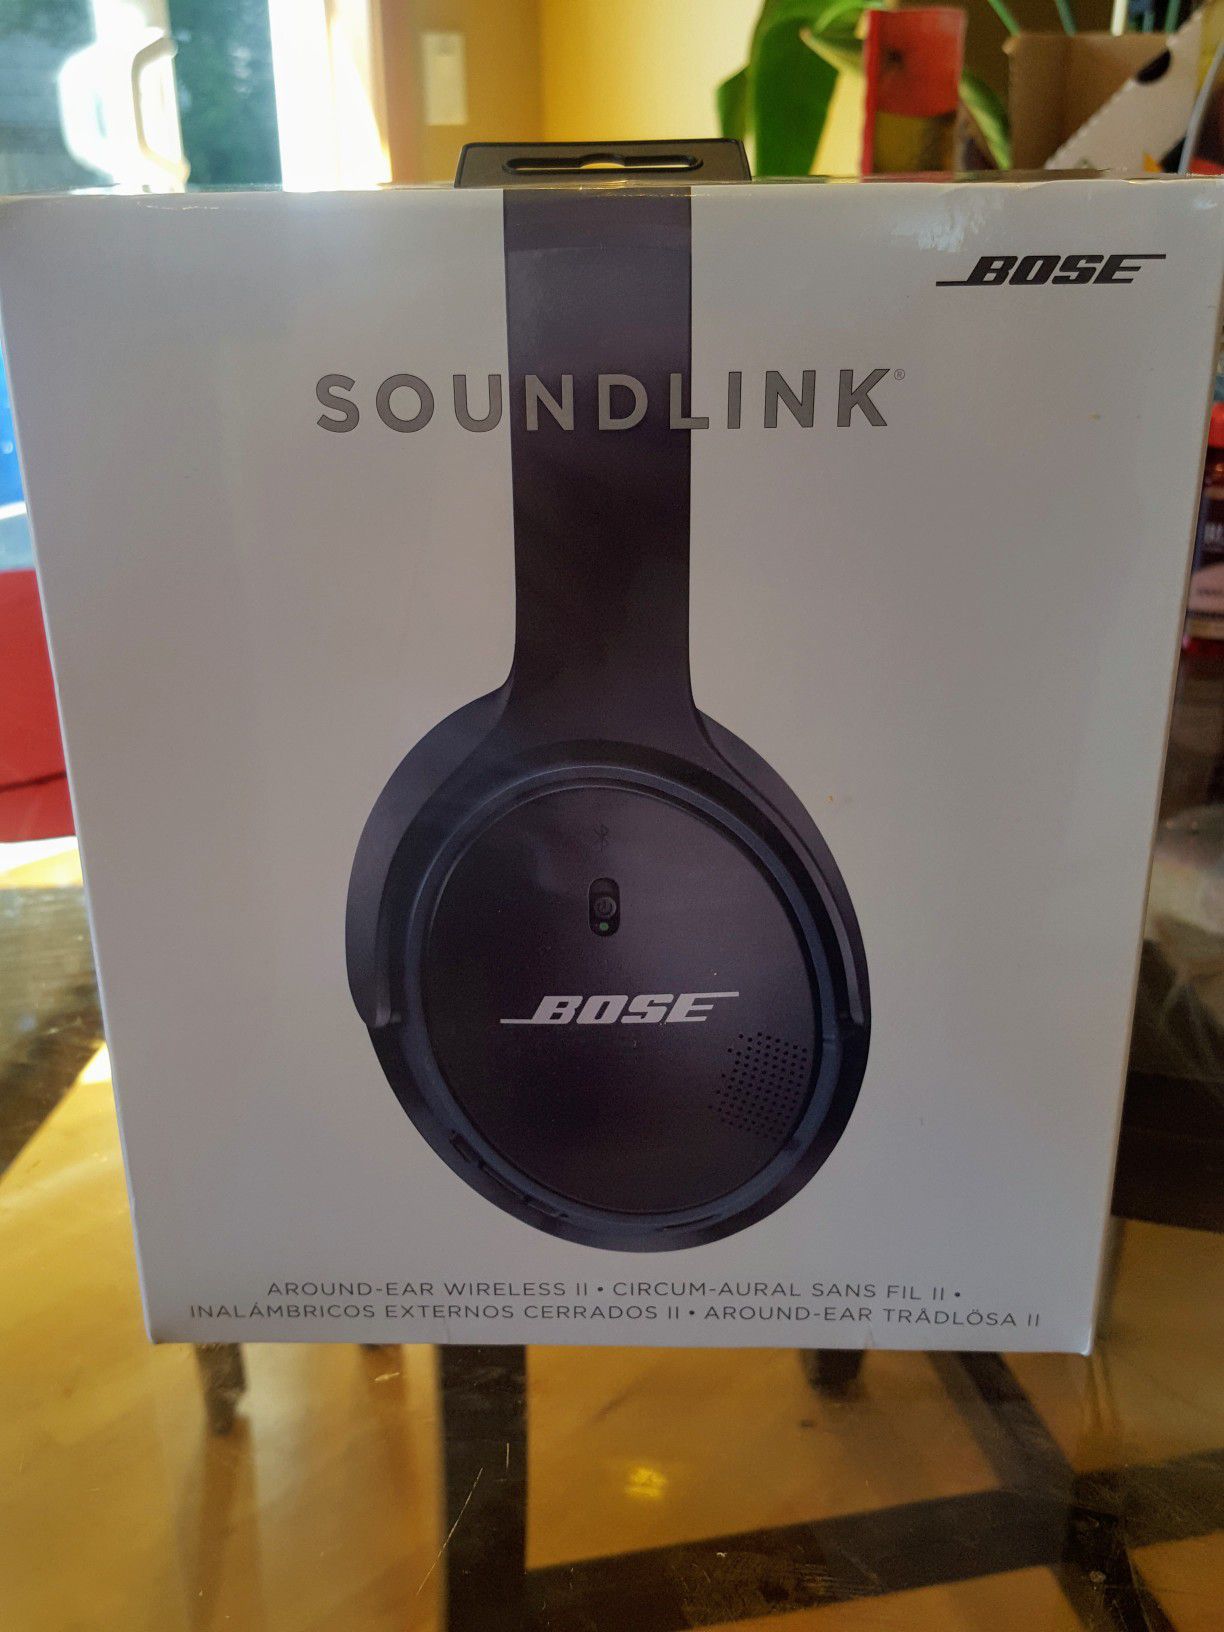 Brand new Bose soundlink II wireless headphones